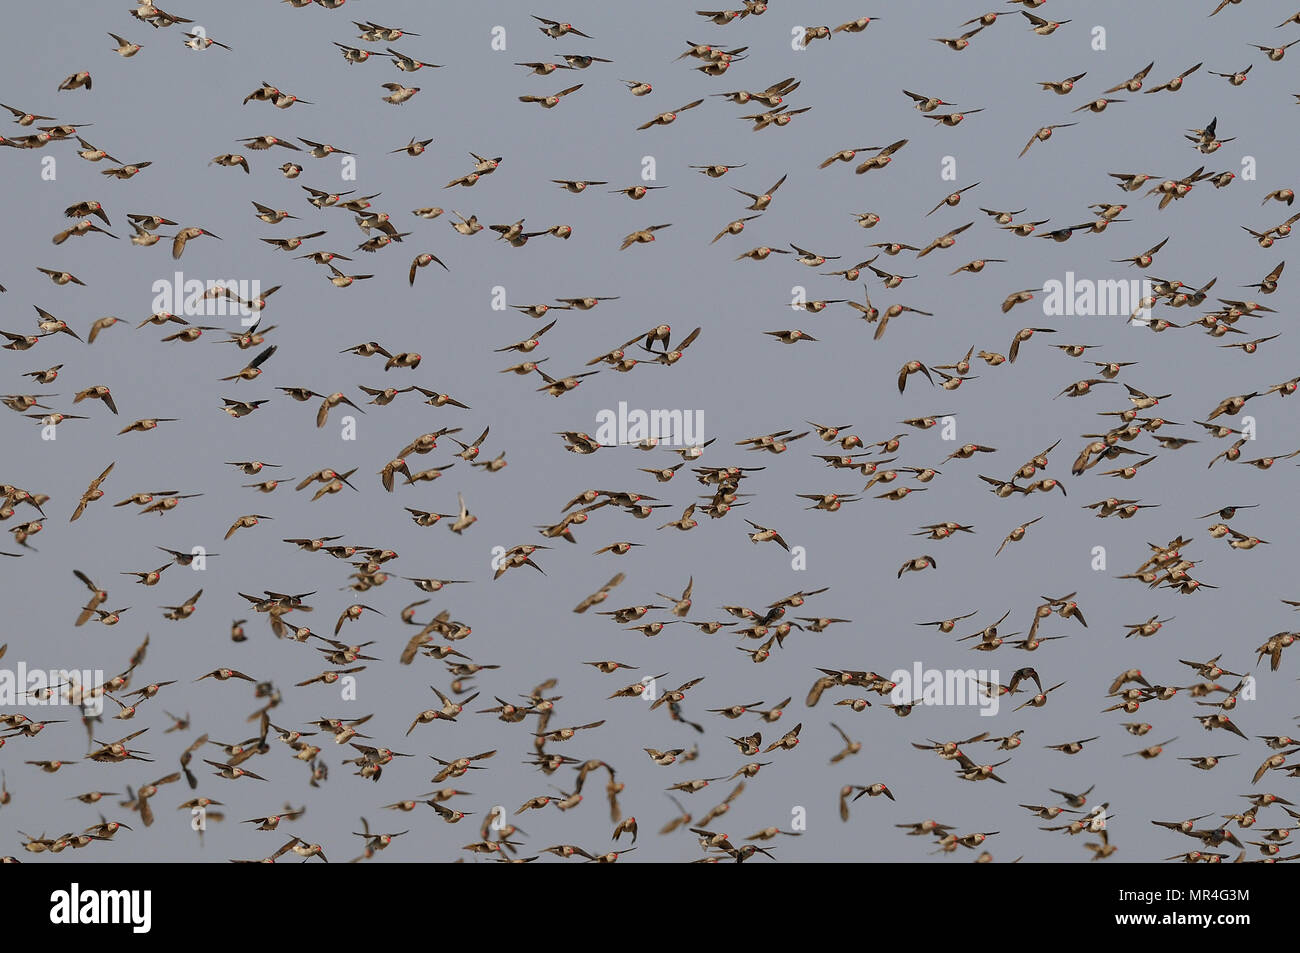 Redbilled quelea swarm in the sky, (quelea quelea), etosha nationalpark, namibia Stock Photo